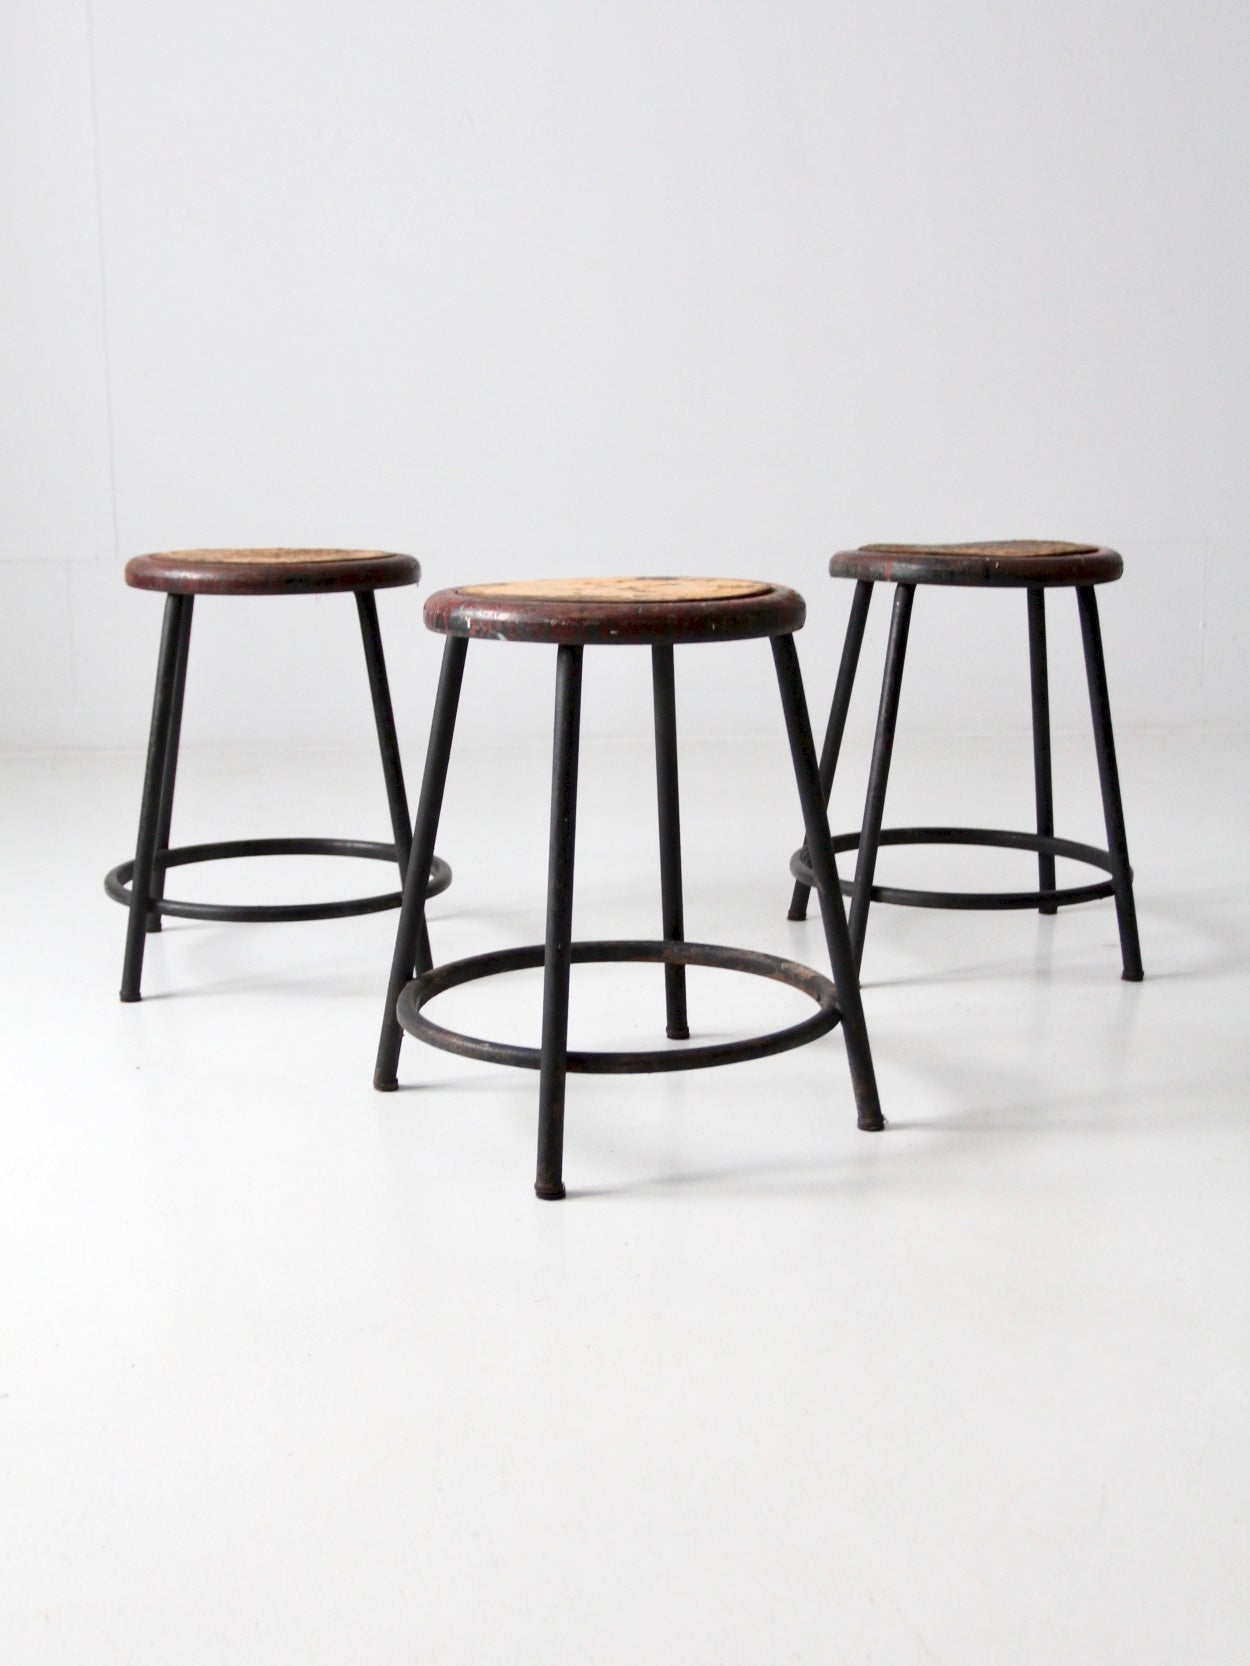 vintage industrial stools - set of 3